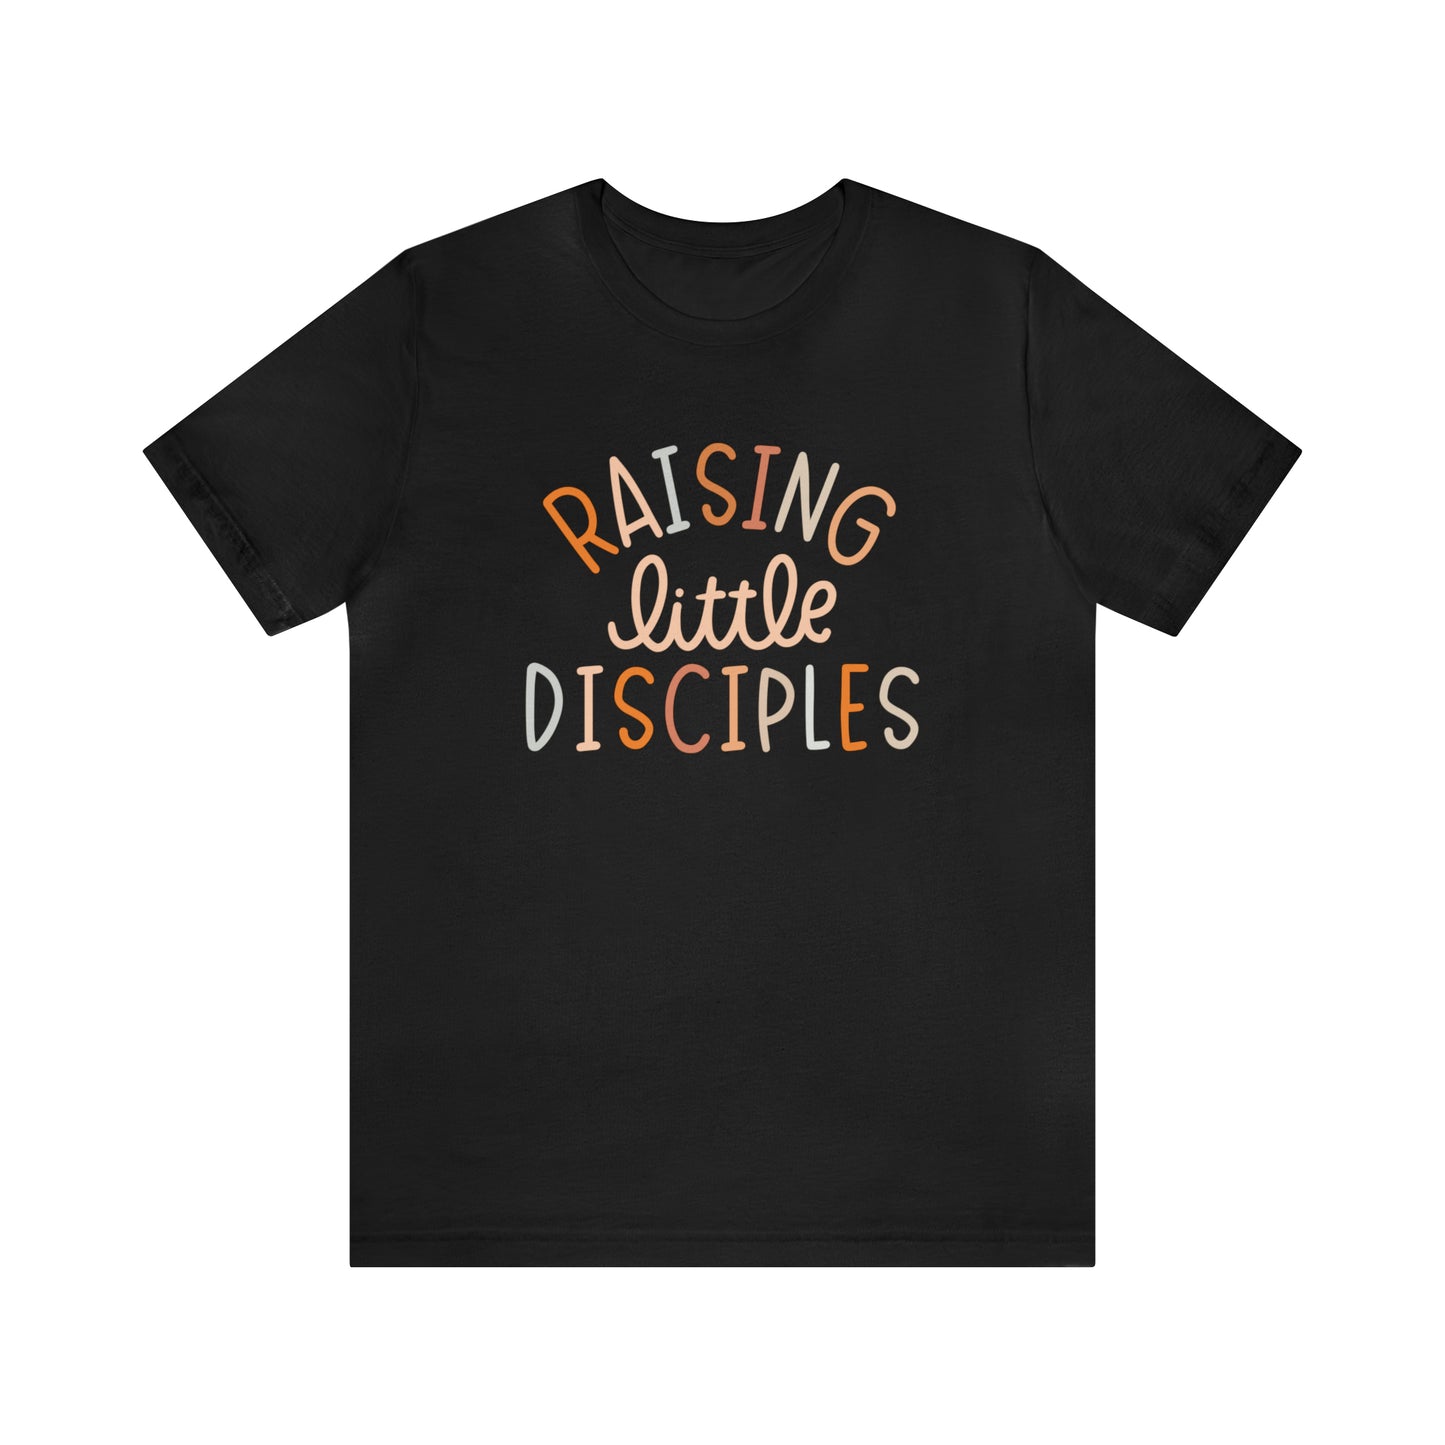 Raising Little Disciples | Women's Tee